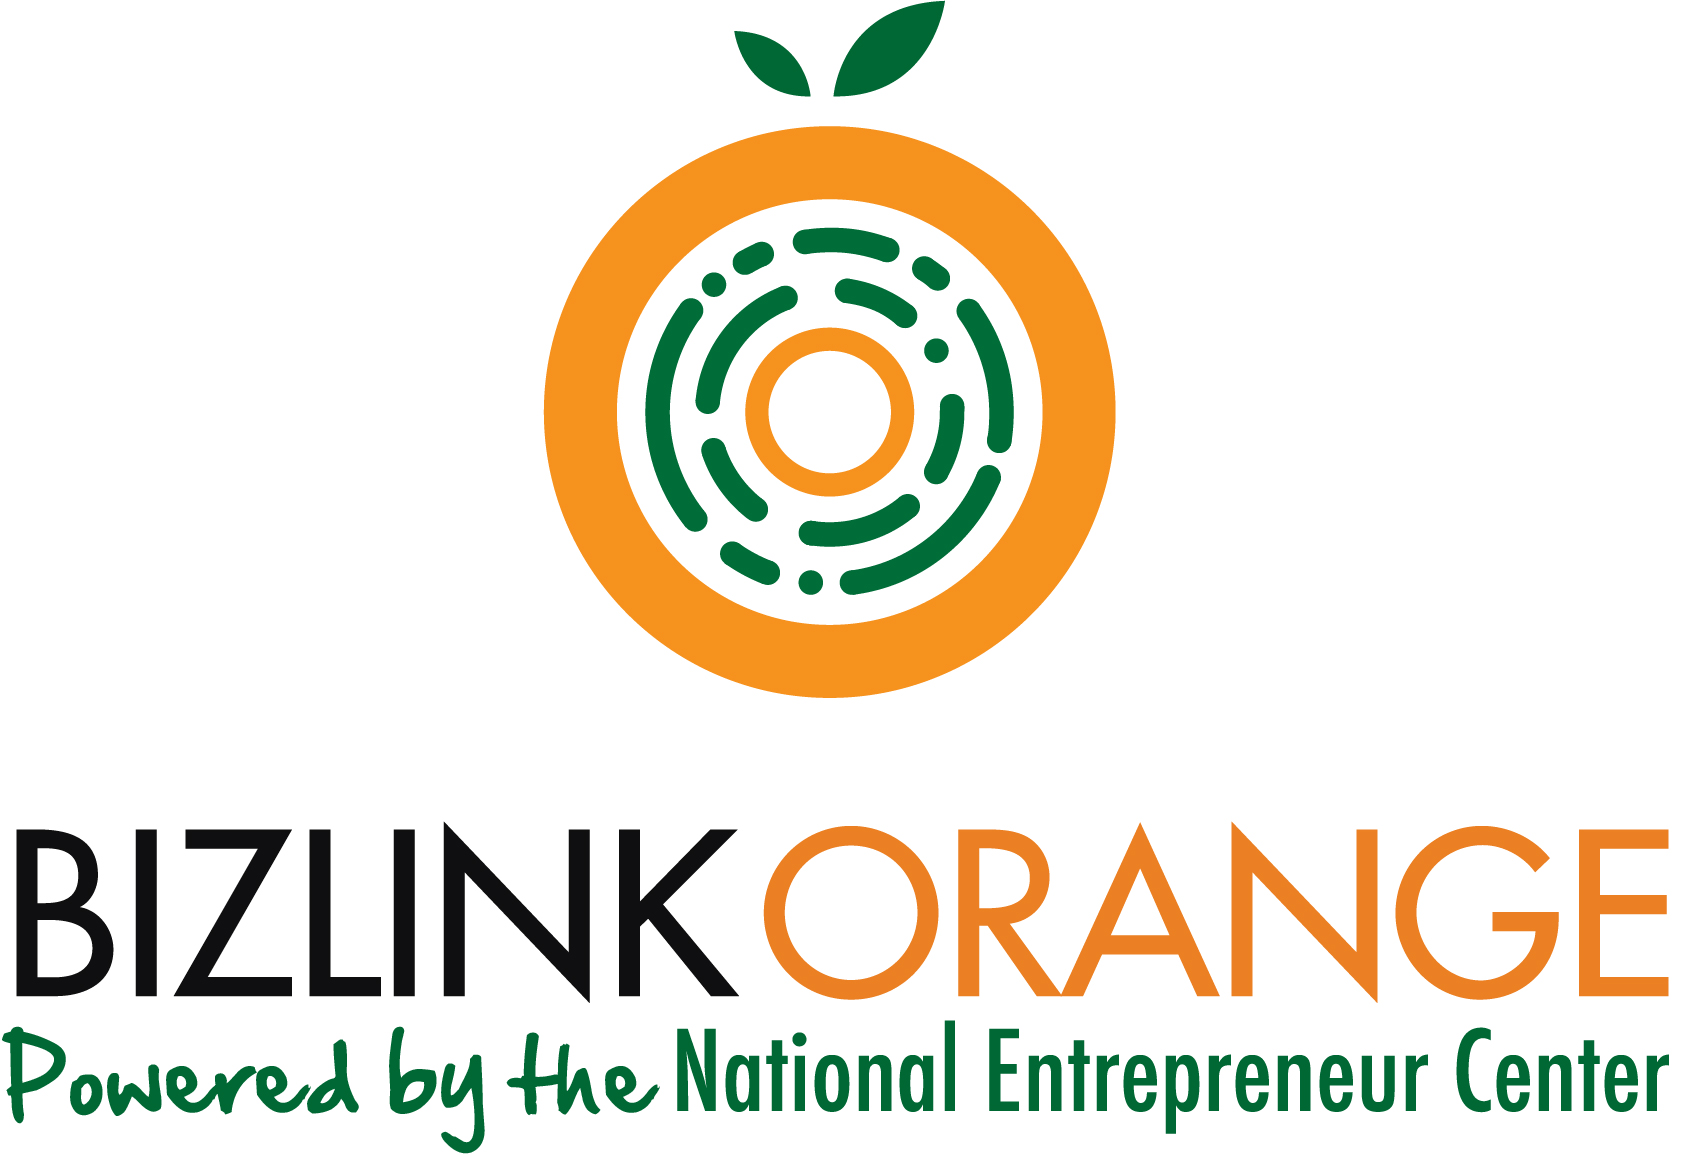 Bizlink Orange logo